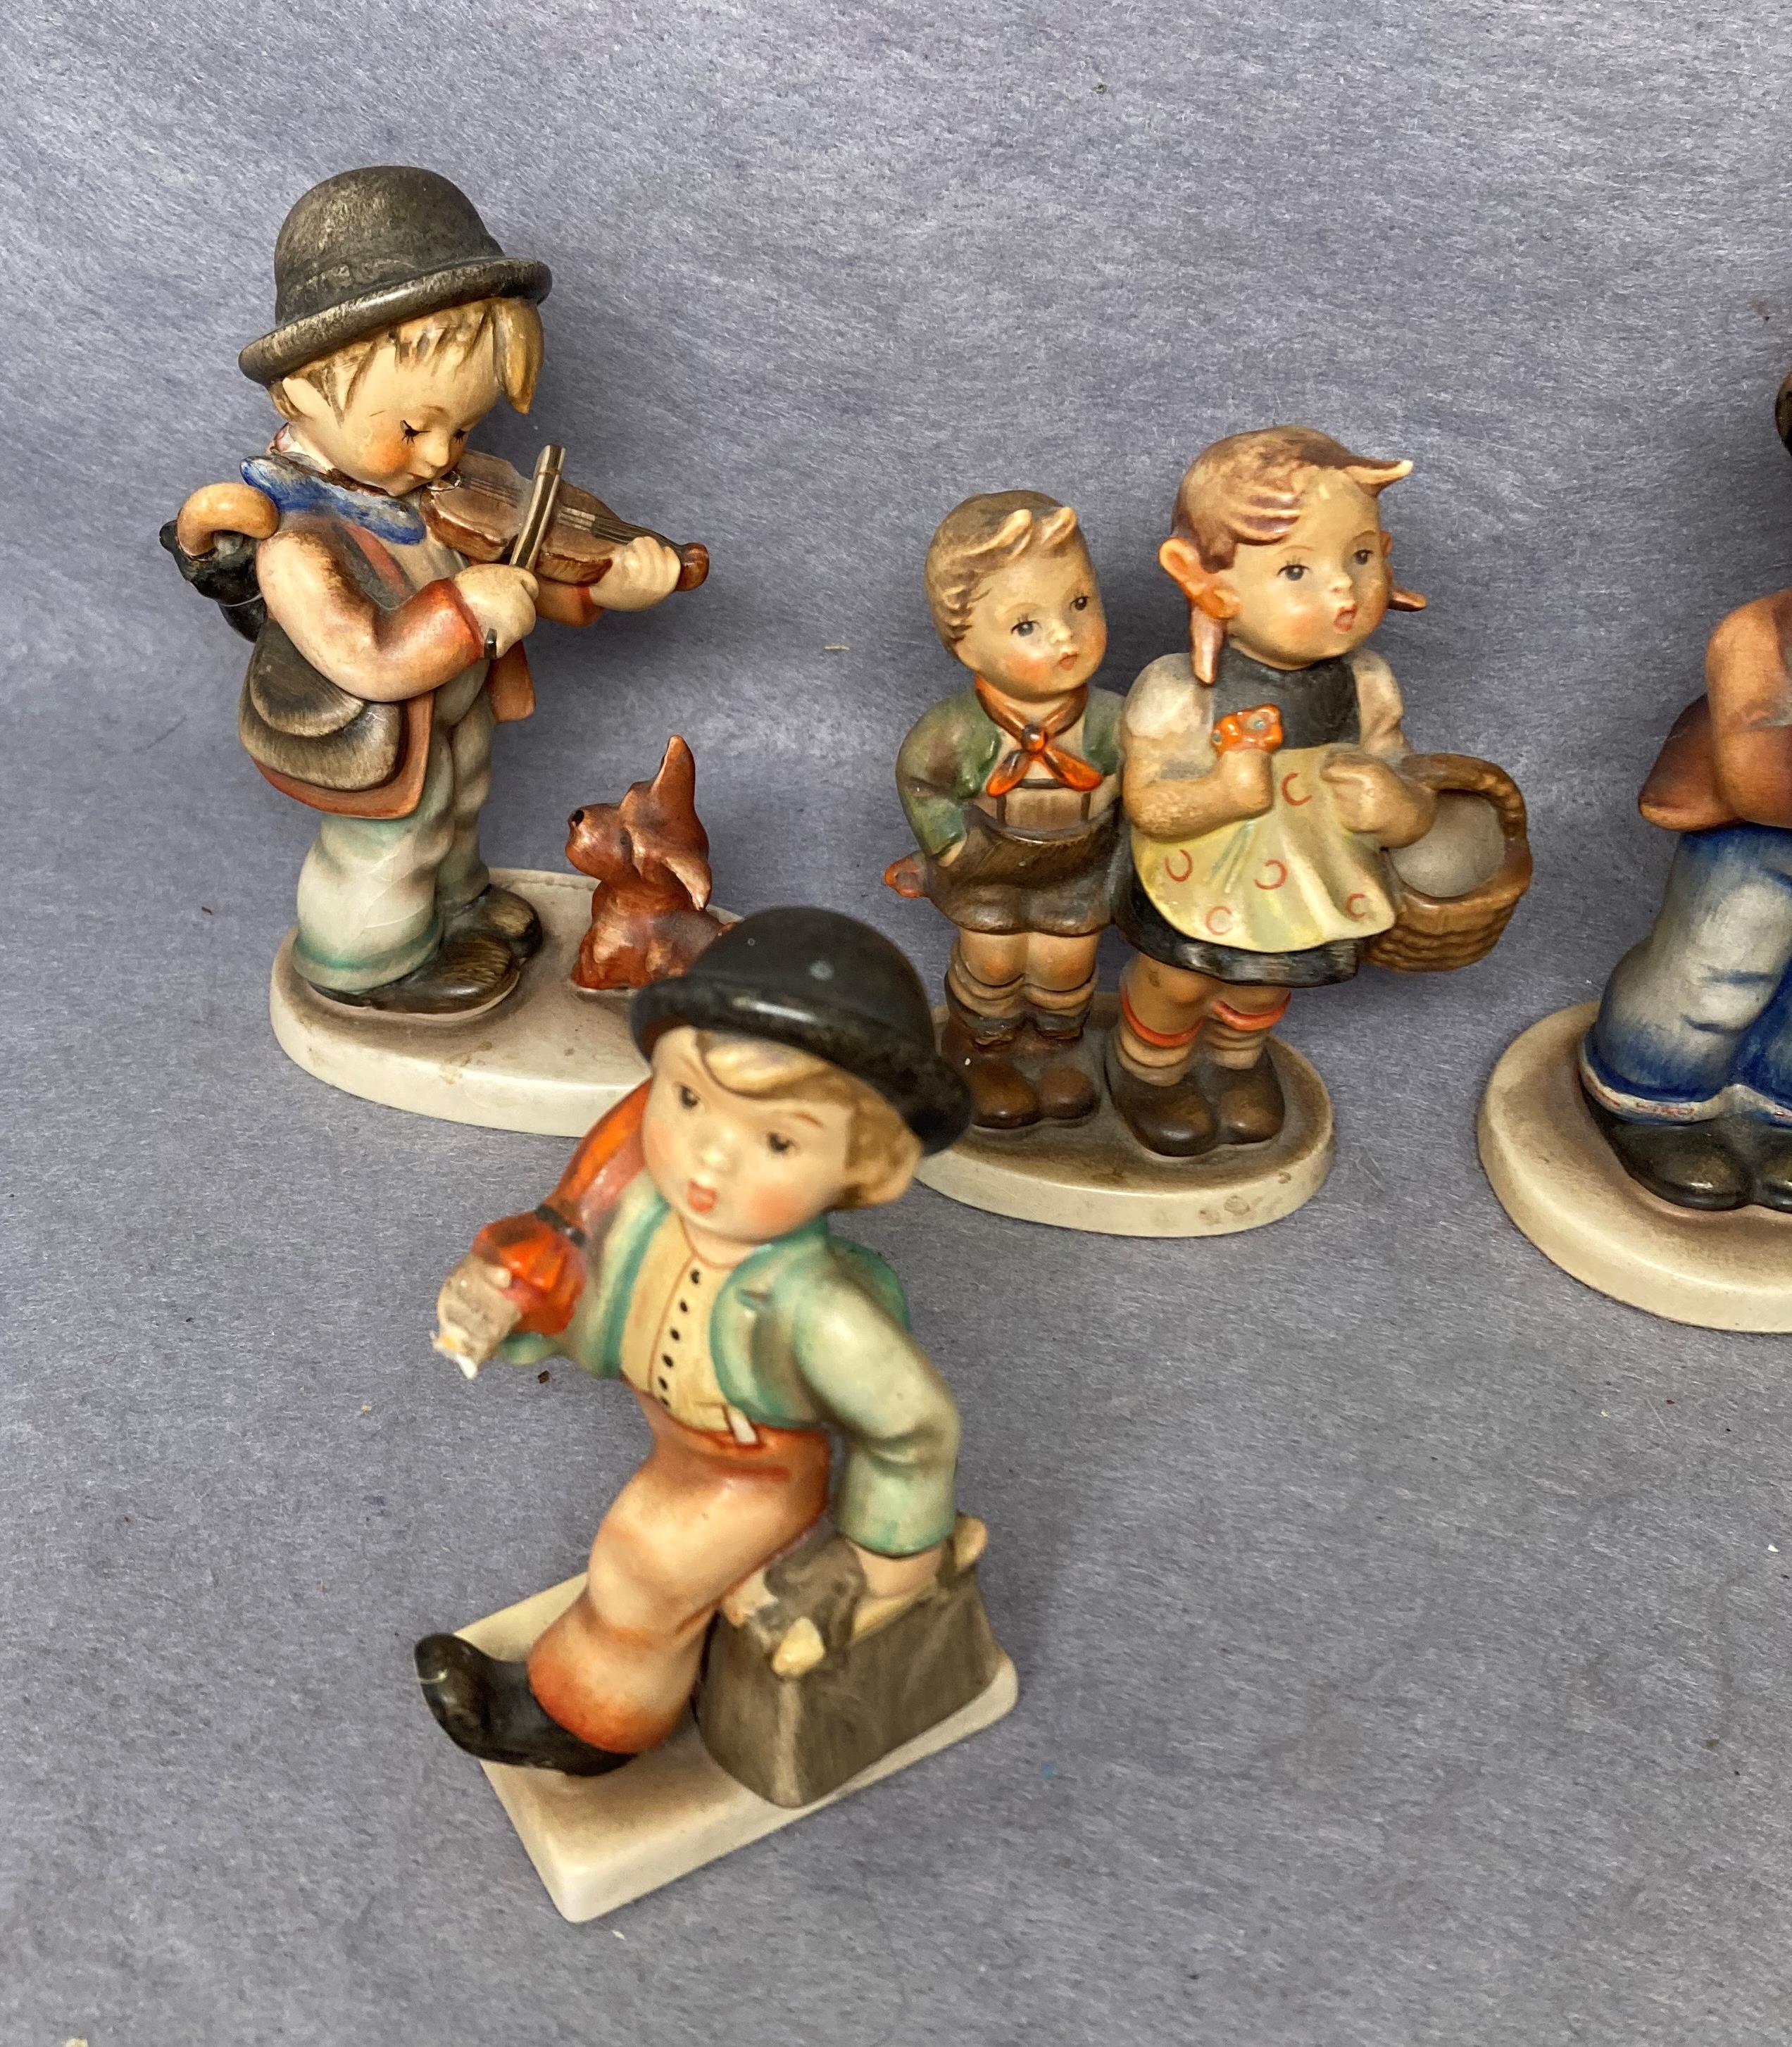 Six 20th Century Hummel ceramic figurines (one has been repaired) (saleroom location: S3 QC17 GC) - Image 2 of 5